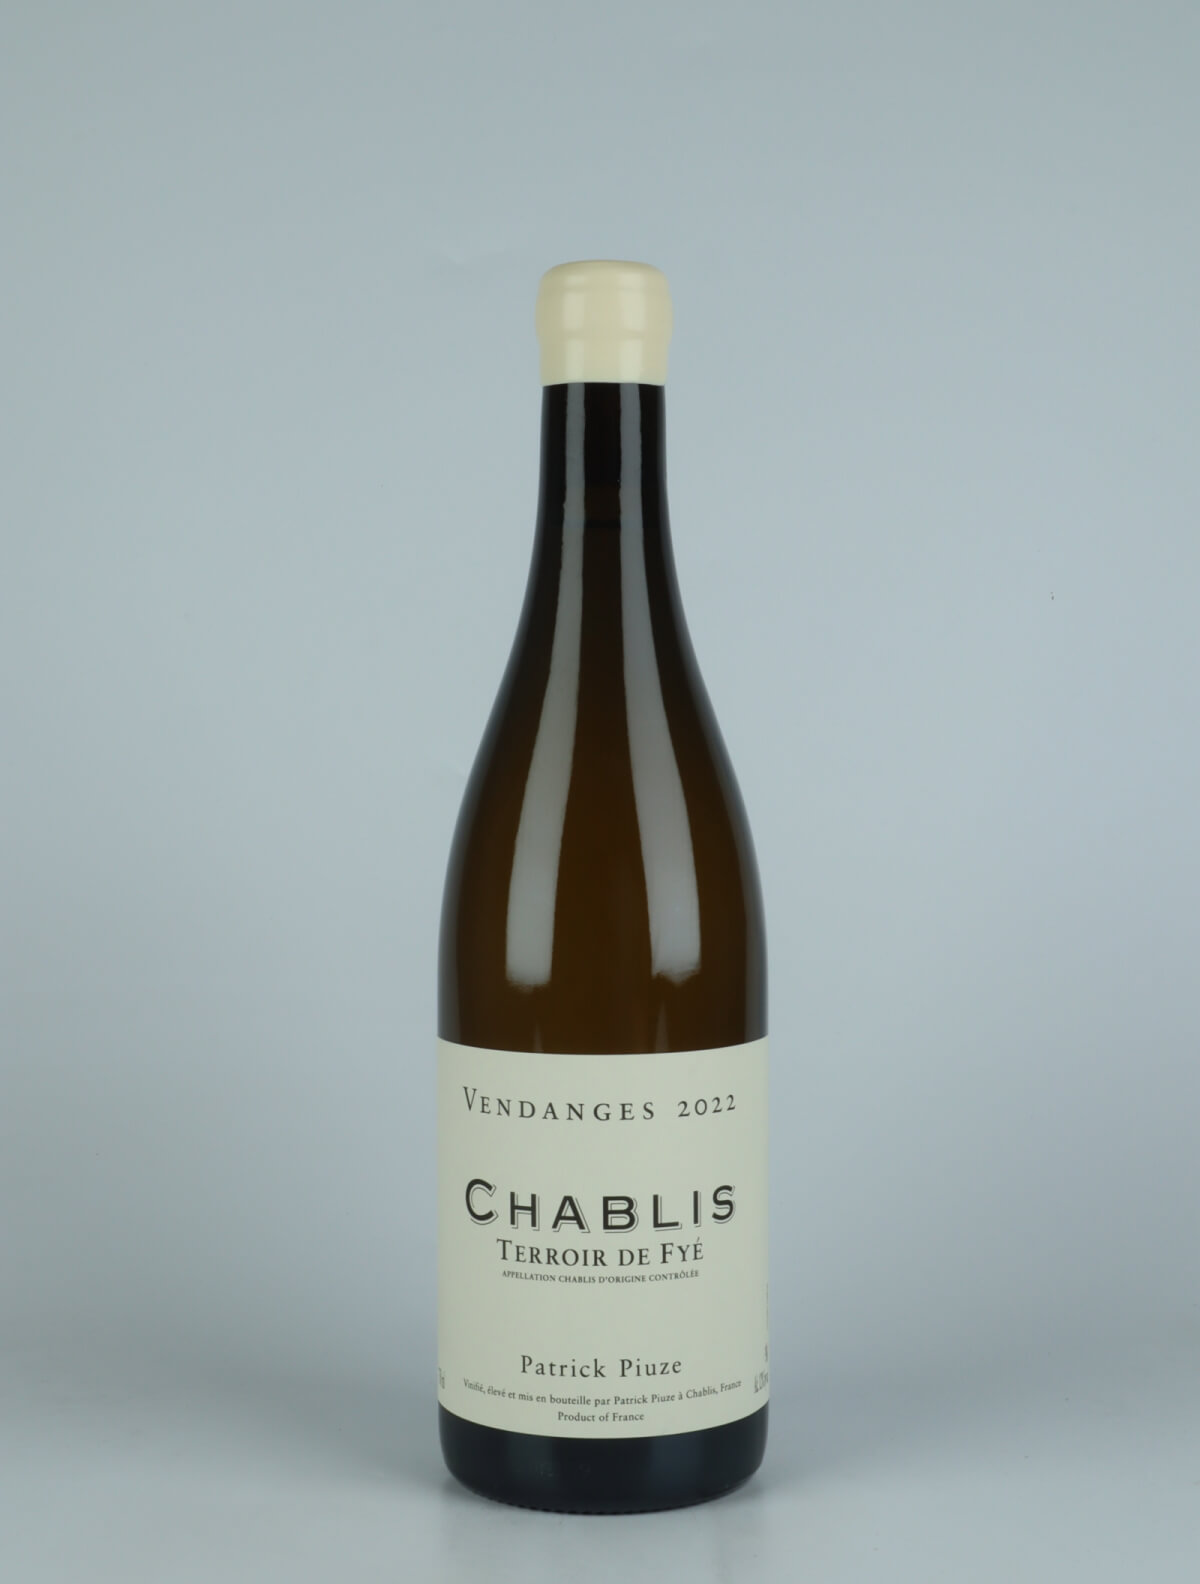 En flaske 2022 Chablis - Terroir de Fyé Hvidvin fra Patrick Piuze, Bourgogne i Frankrig